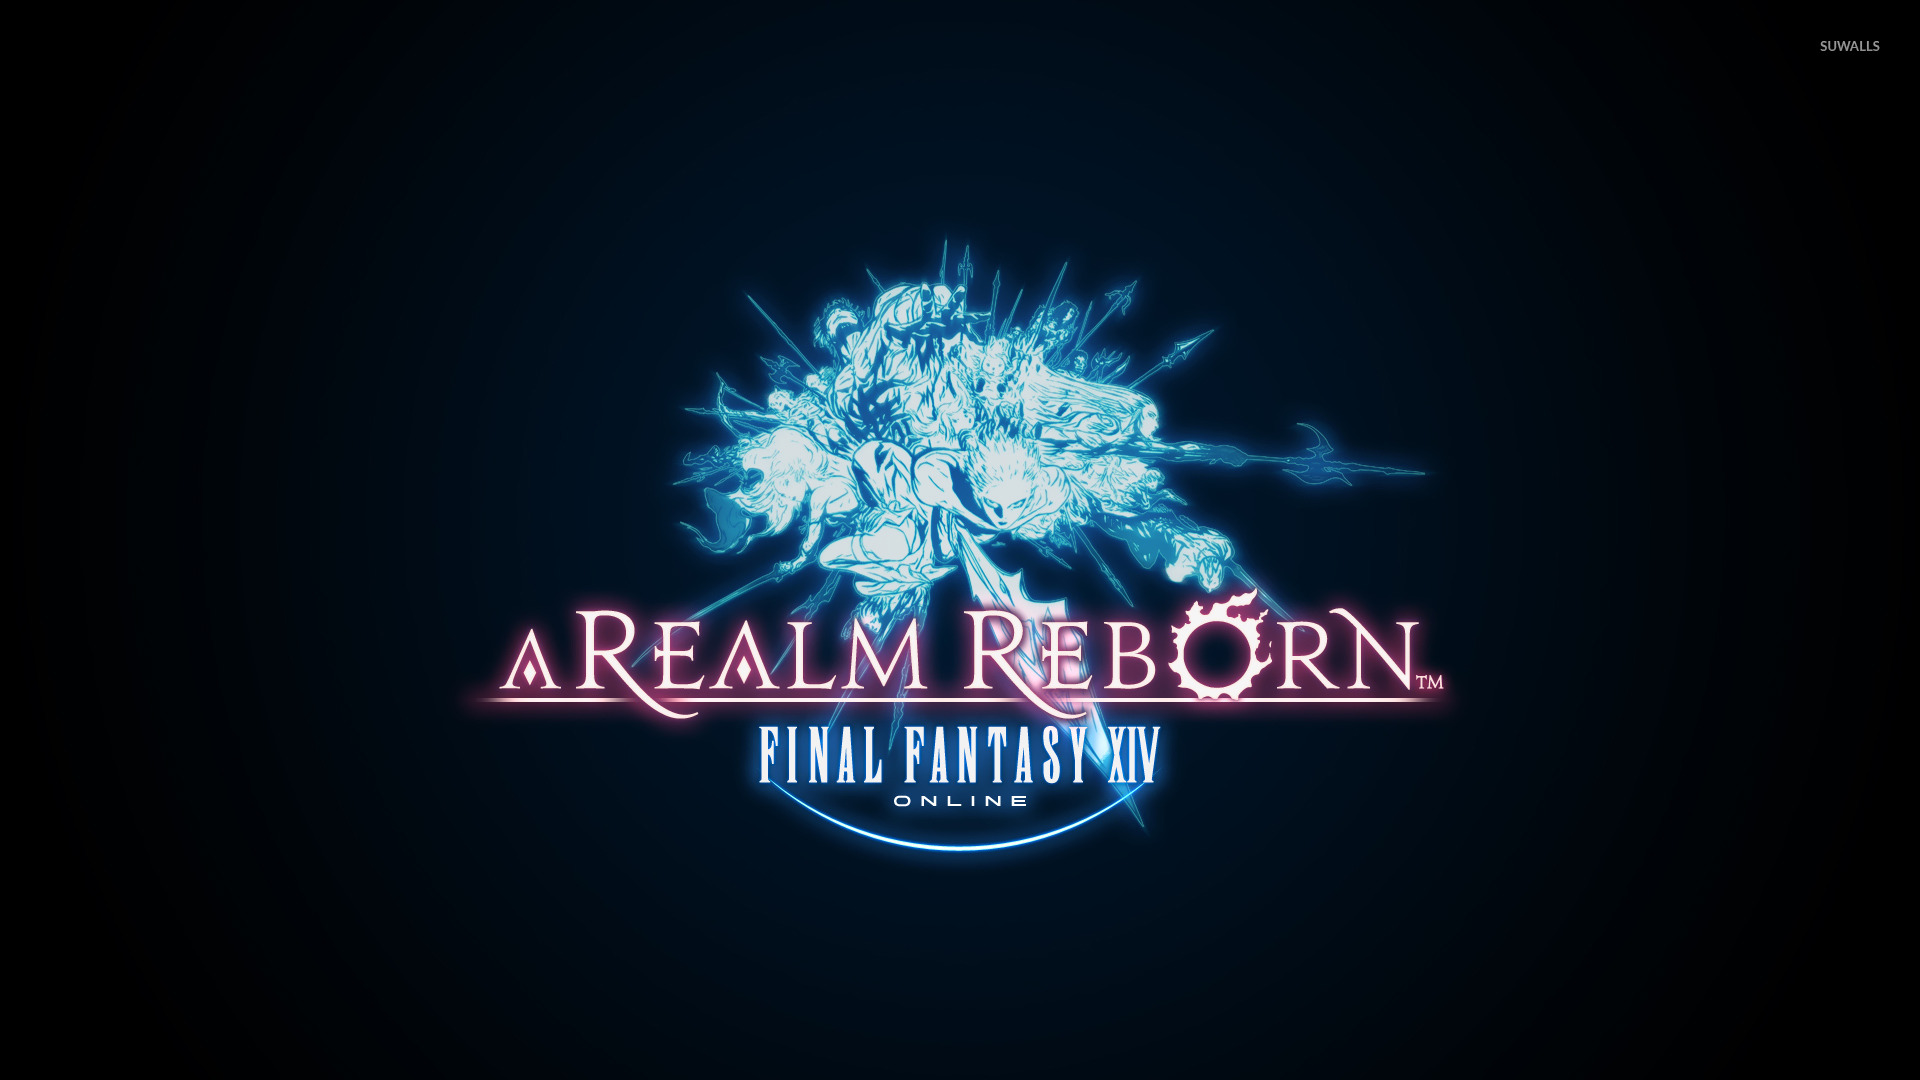 Final Fantasy Xiv: Online - HD Wallpaper 